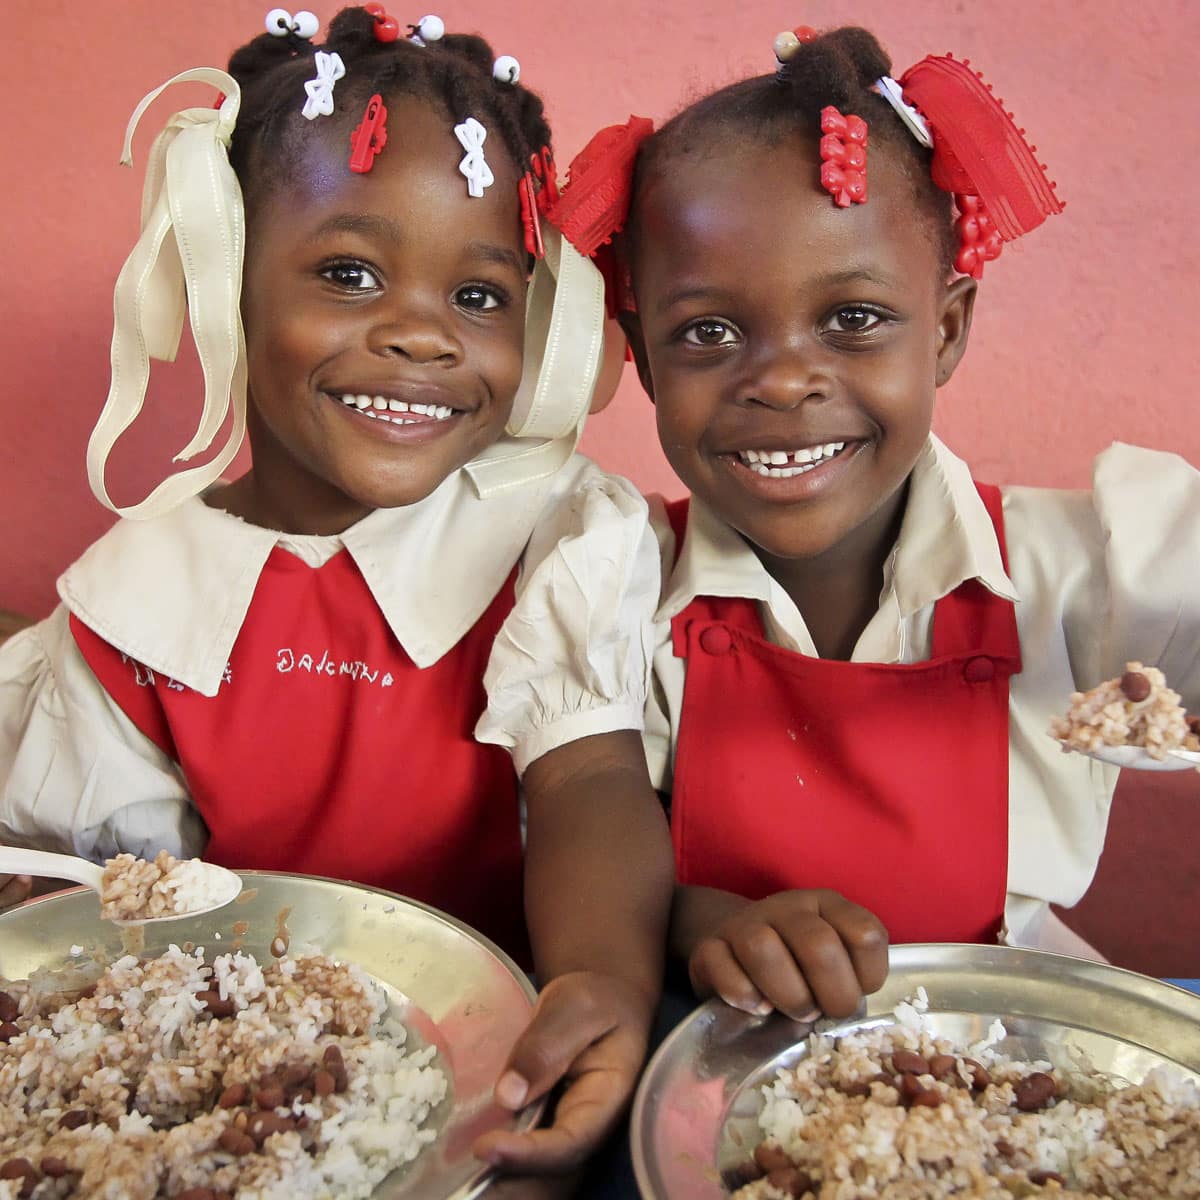 glada barn äter i haiti